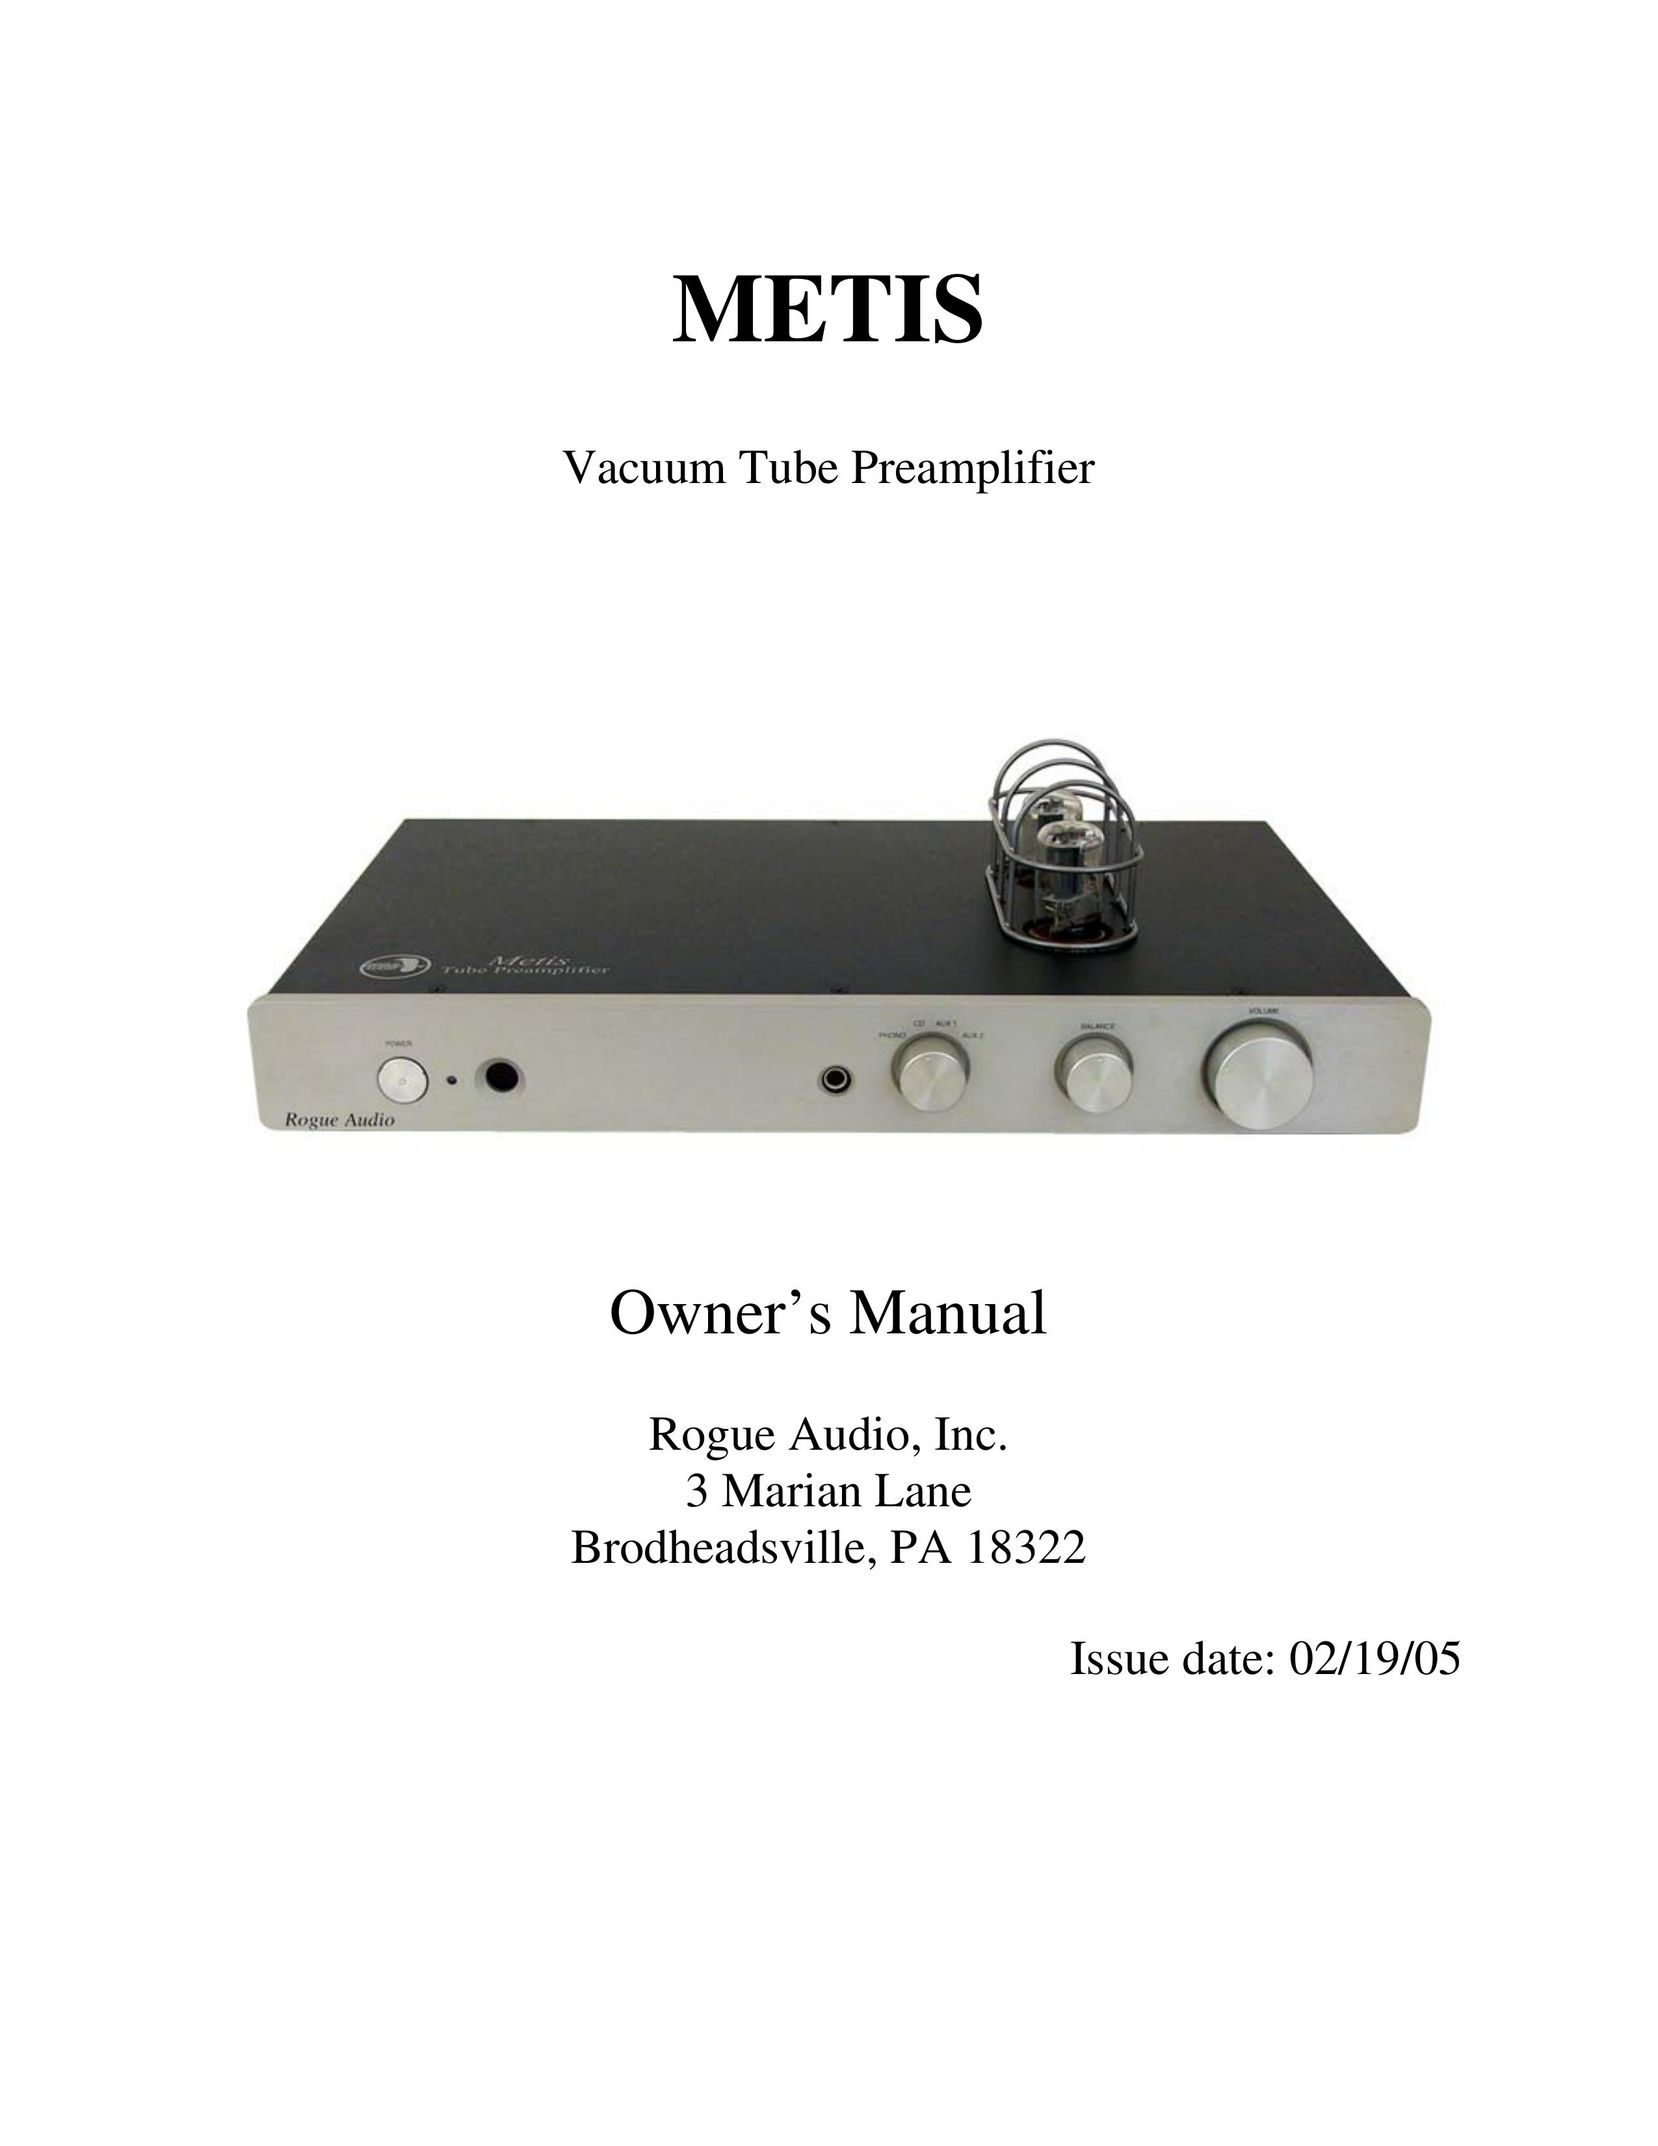 Rogue Audio METIS Vacuum Tube Preamplifier Stereo Amplifier User Manual